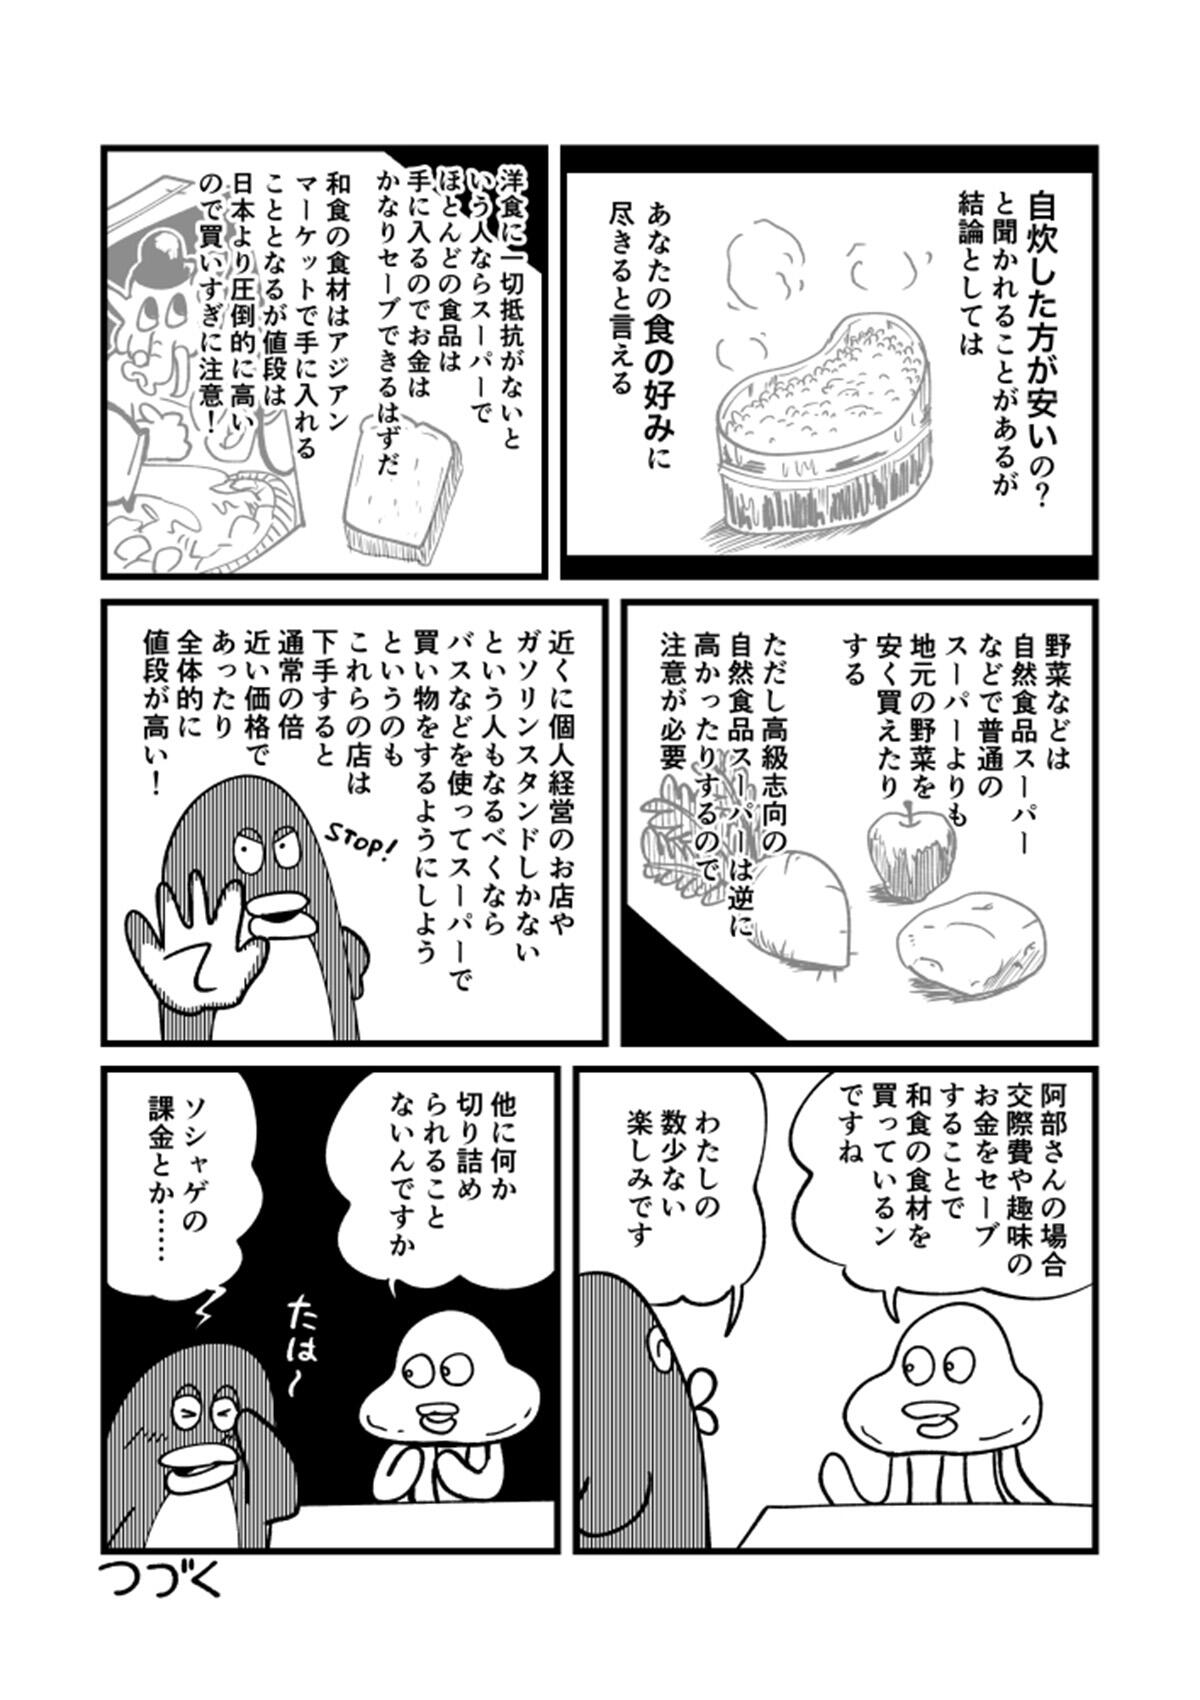 https://www.ryugaku.co.jp/column/images/jawamura15_6_1200.jpg